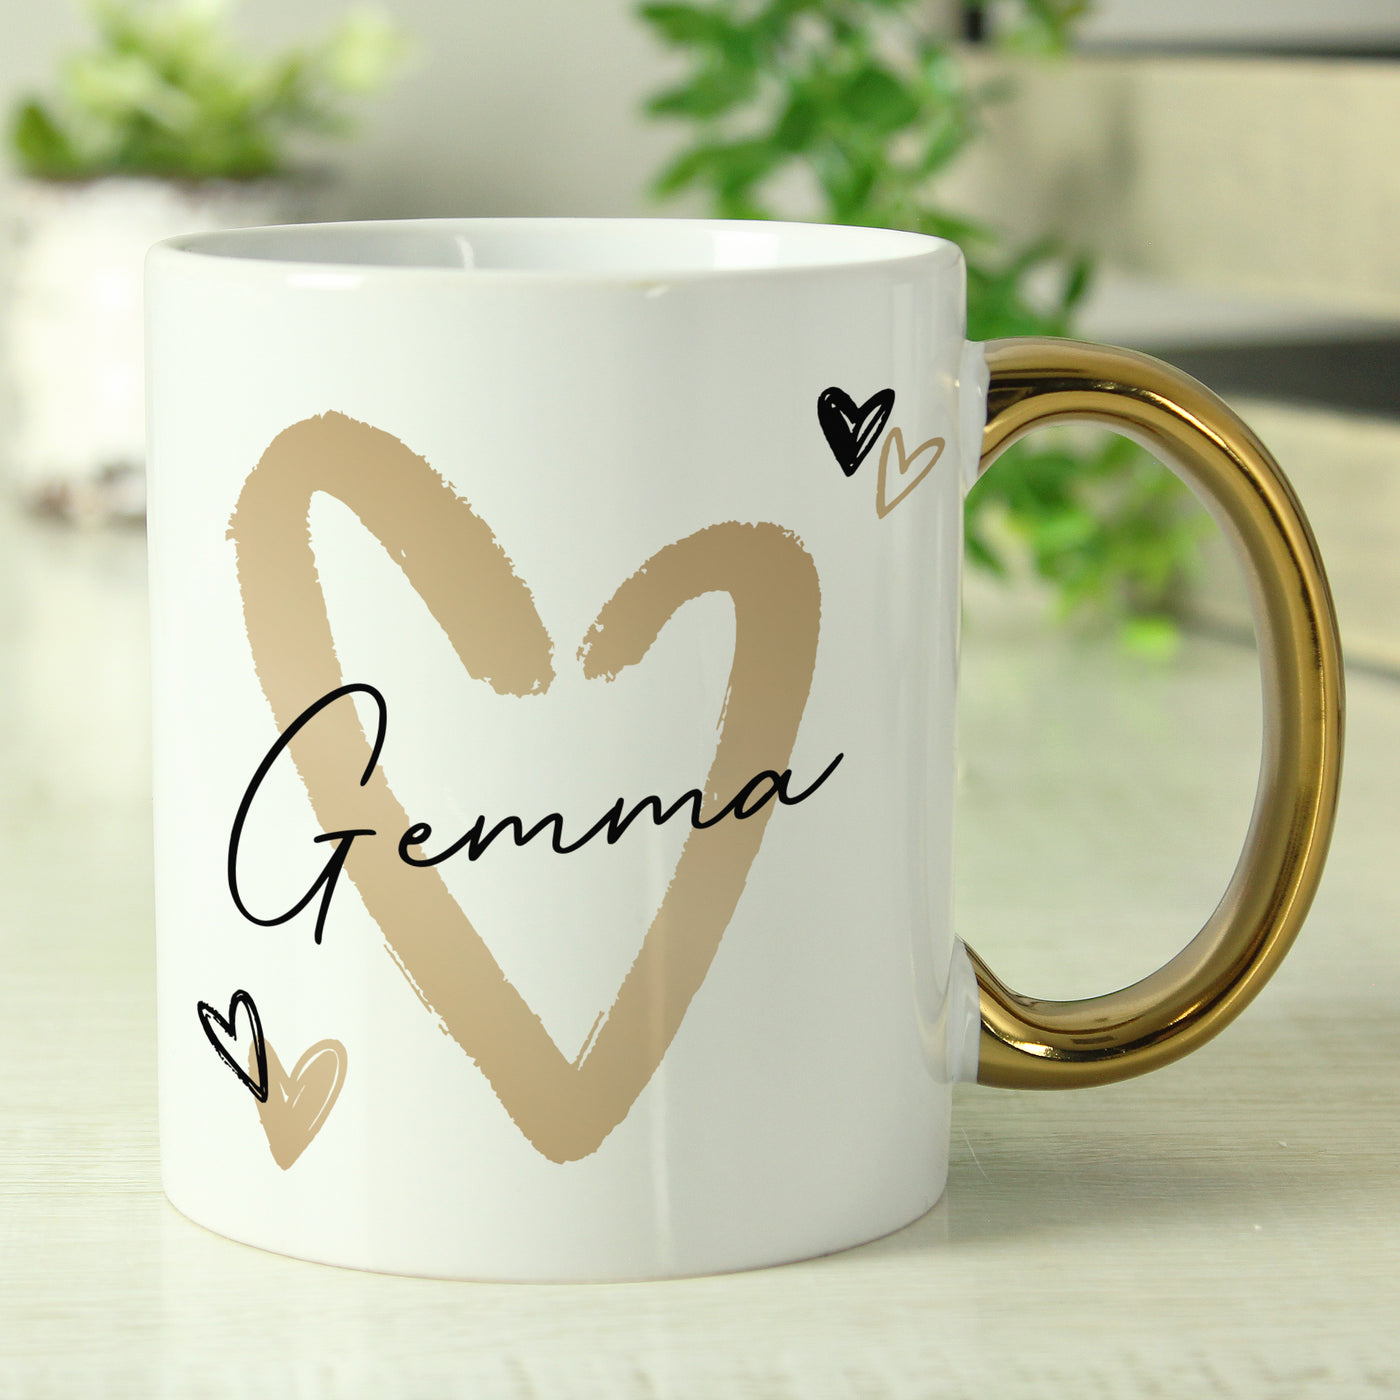 Personalised Hearts Gold Handled Ceramic Mug